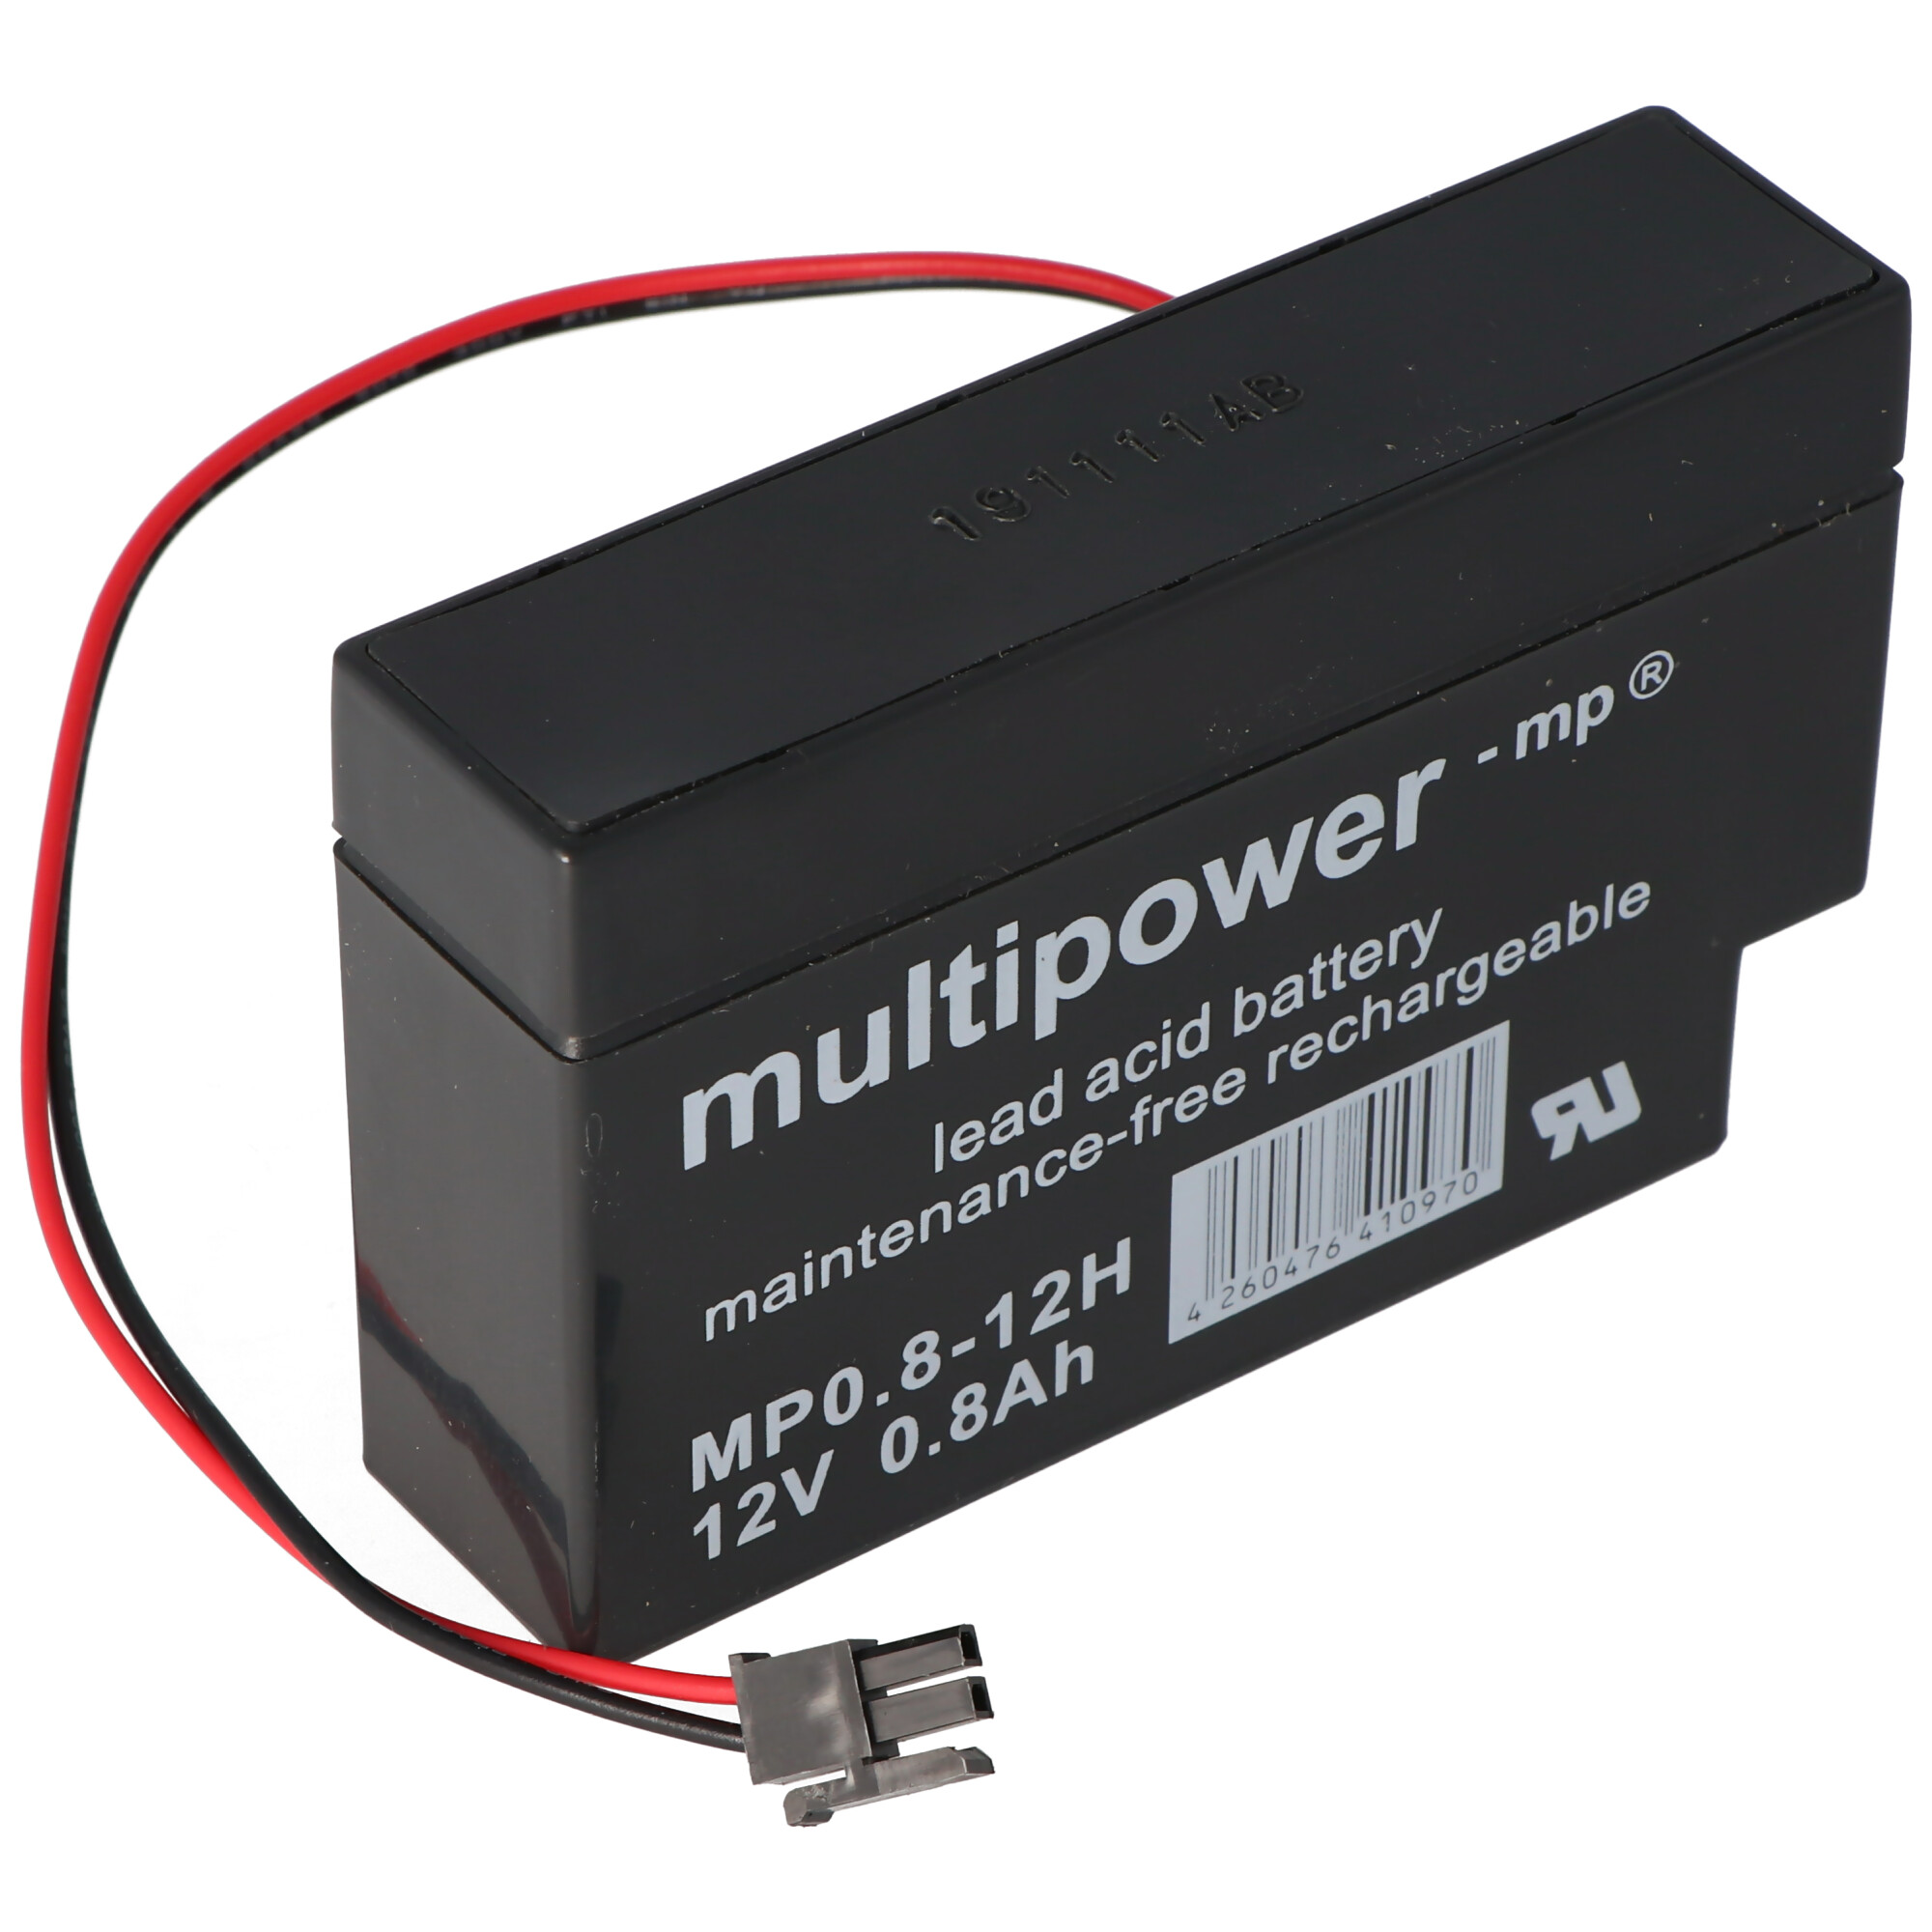 Multipower MP0.8-12H Blei Akku mit Molex 43025-200 Stecker schwarz, Akku für Solar Rollomatic DFR 2000 Nr. 1/Solar, Vision CP1208